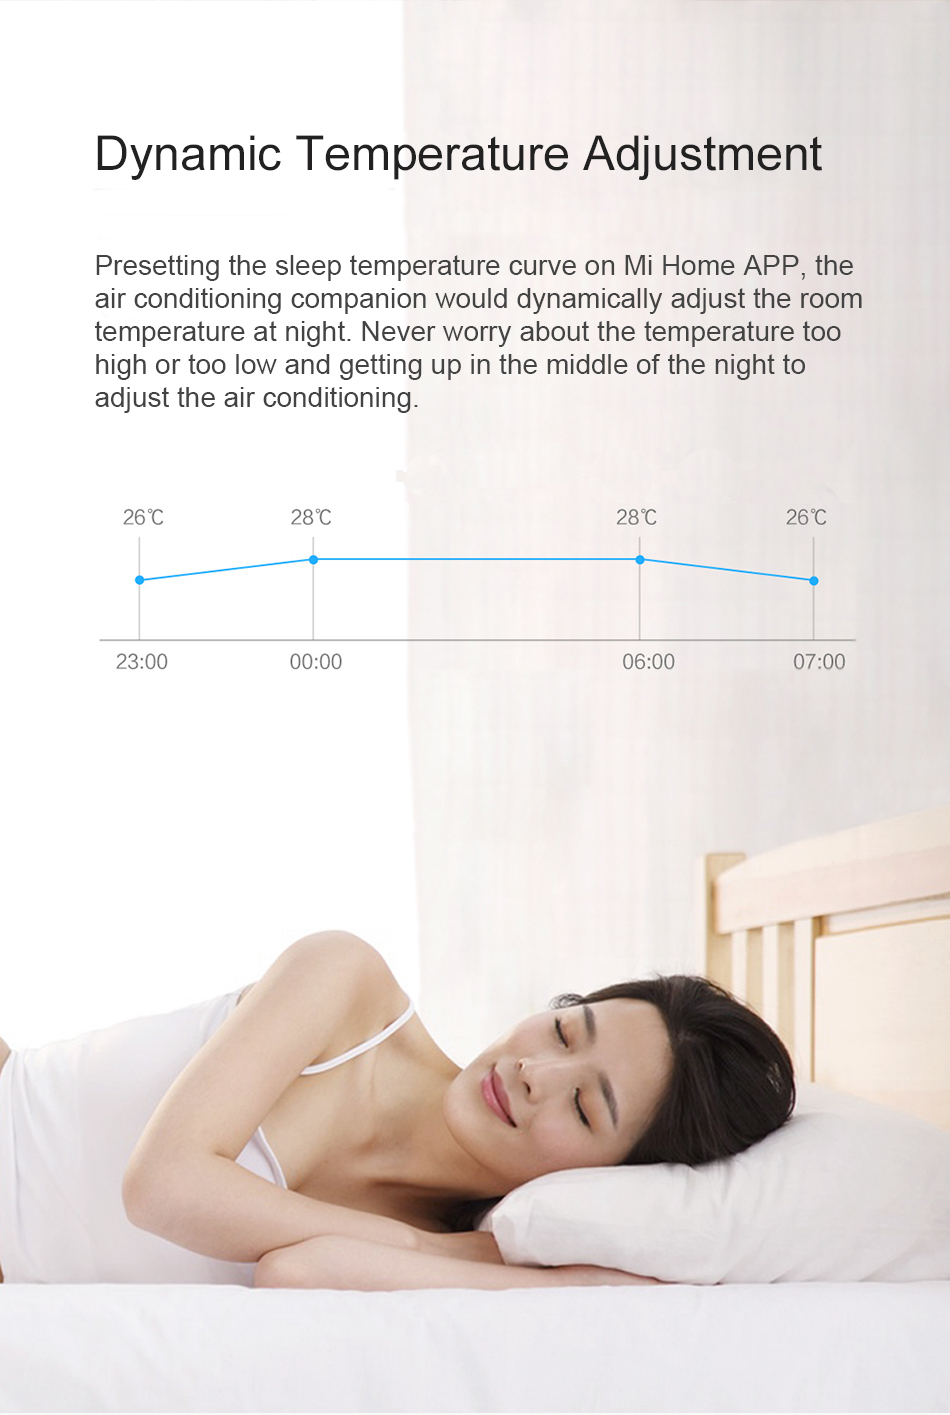 Xiaomi Aqara Air Condition Companioning Smart Socket Upgrade Version